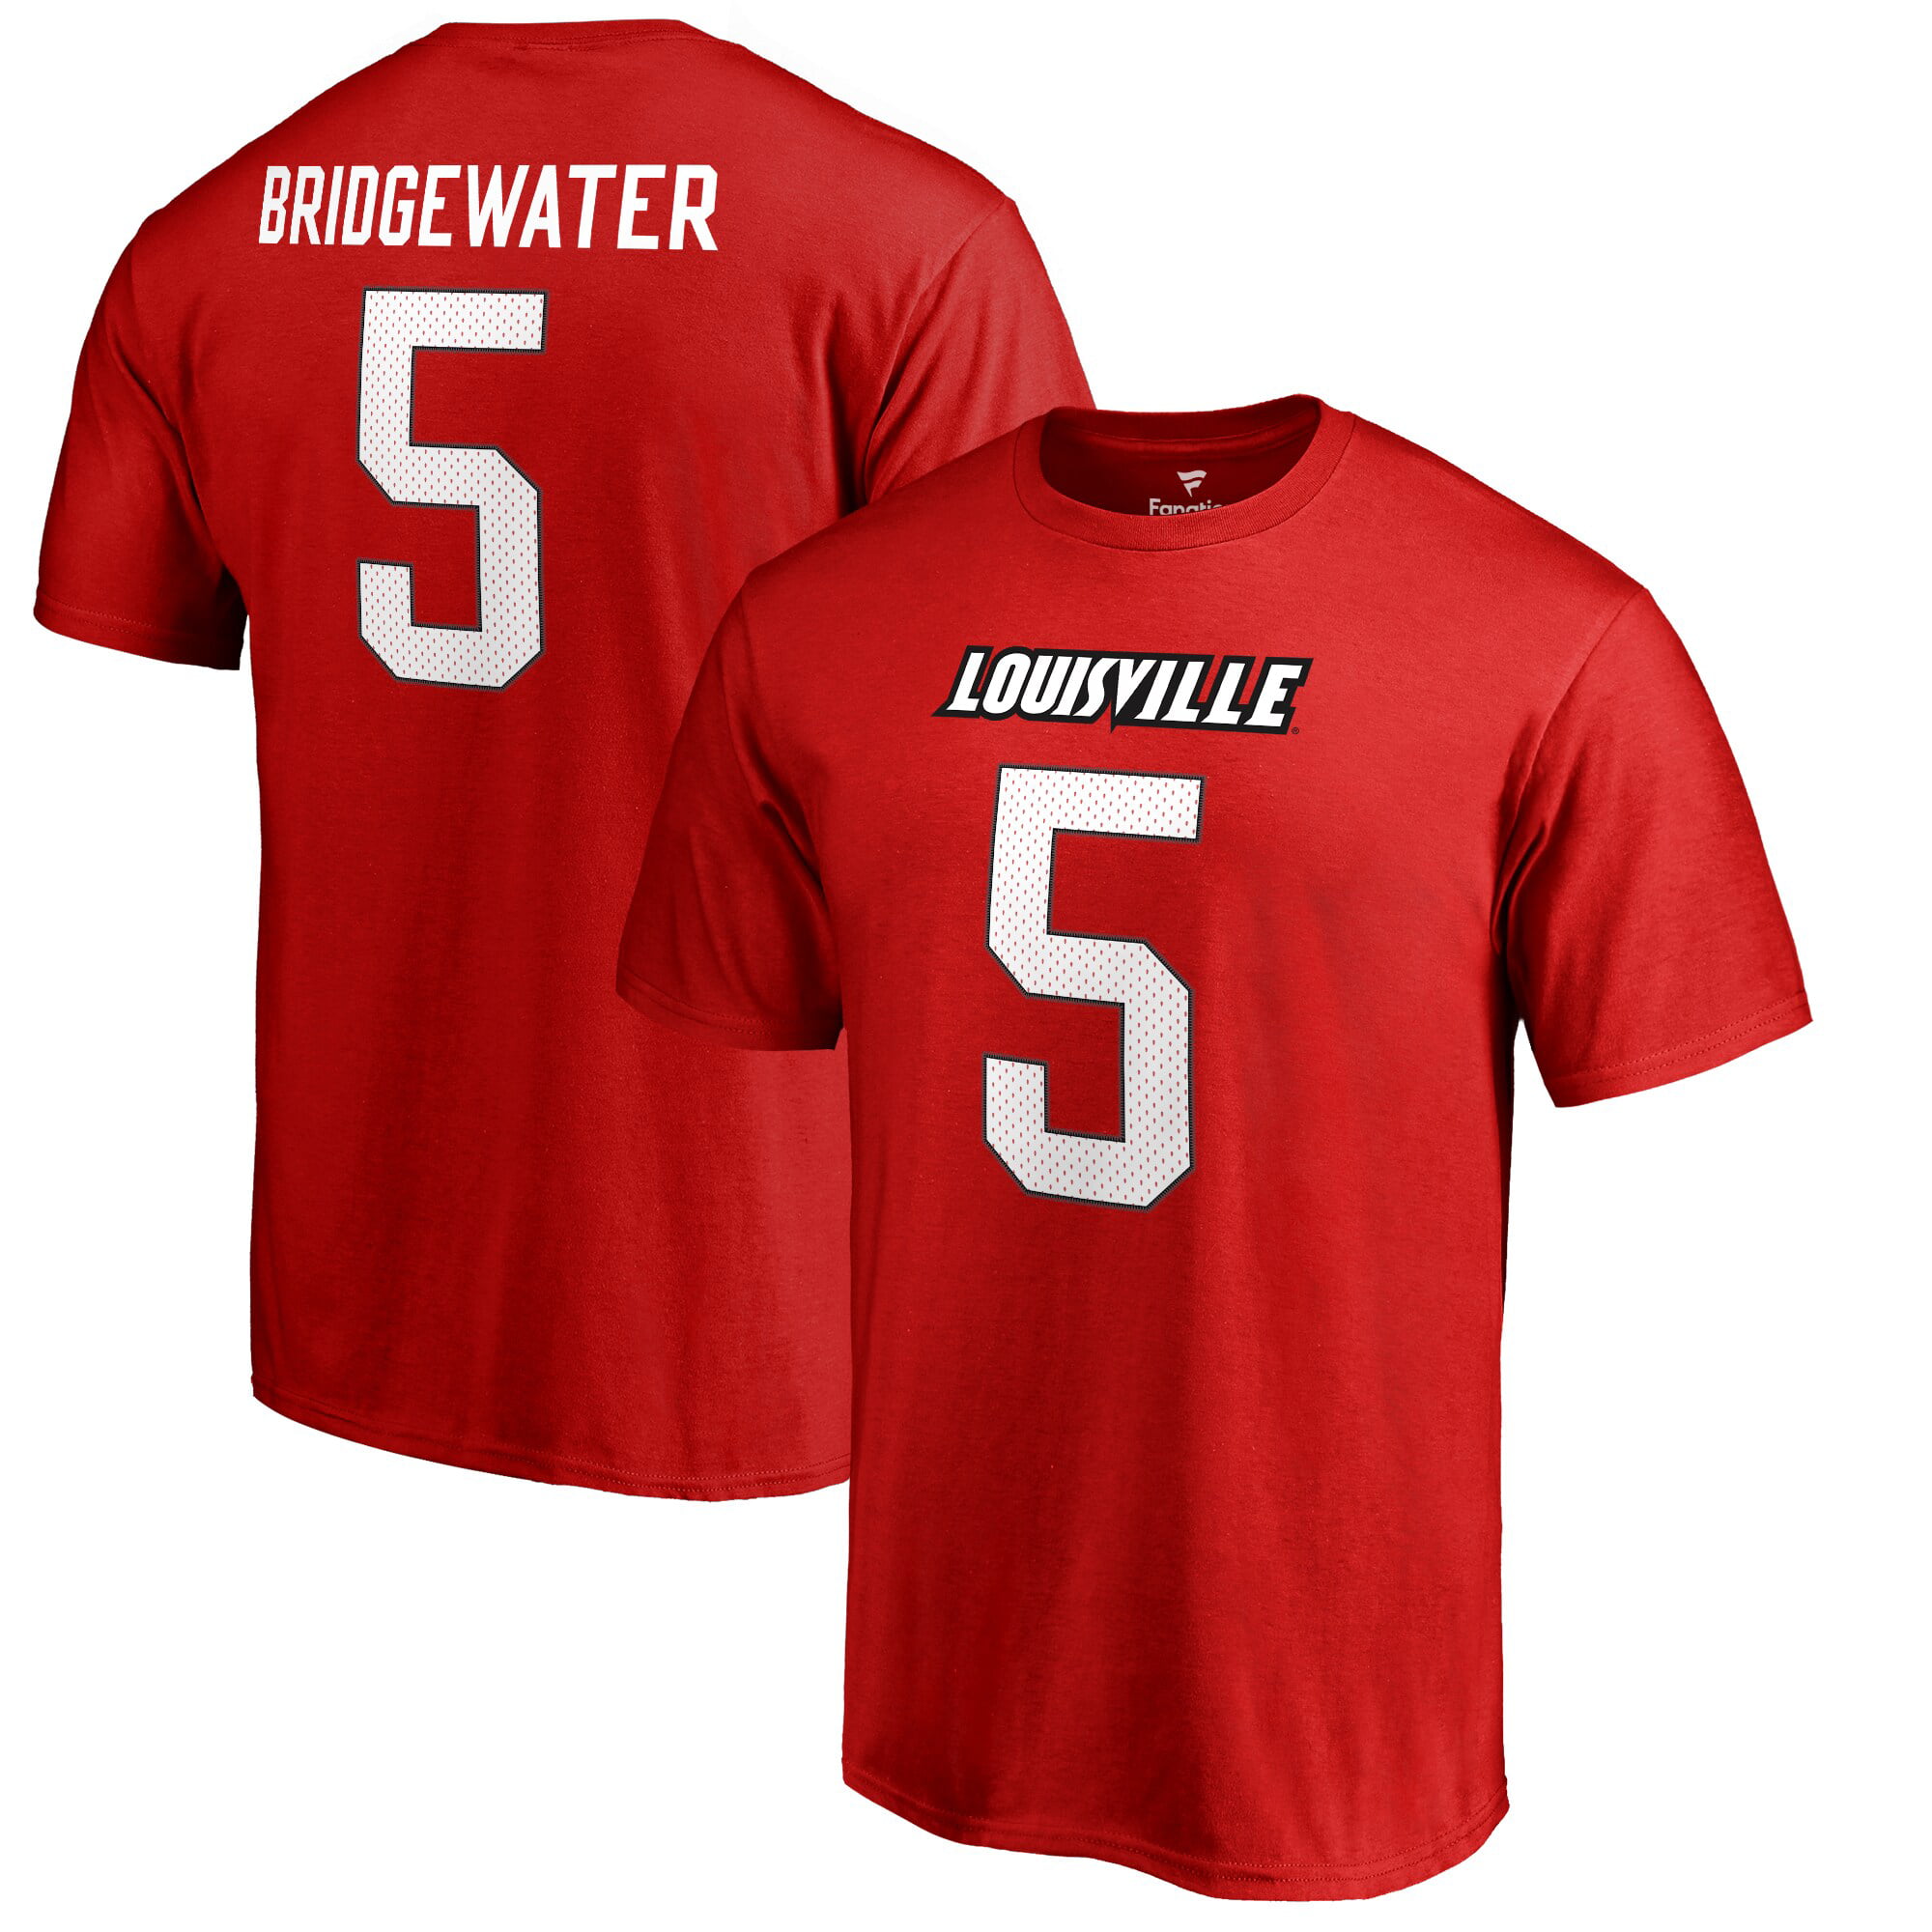 Louisville Cardinals Throwback T-shirt TEDDY BRIDGEWATER football red 2XL 